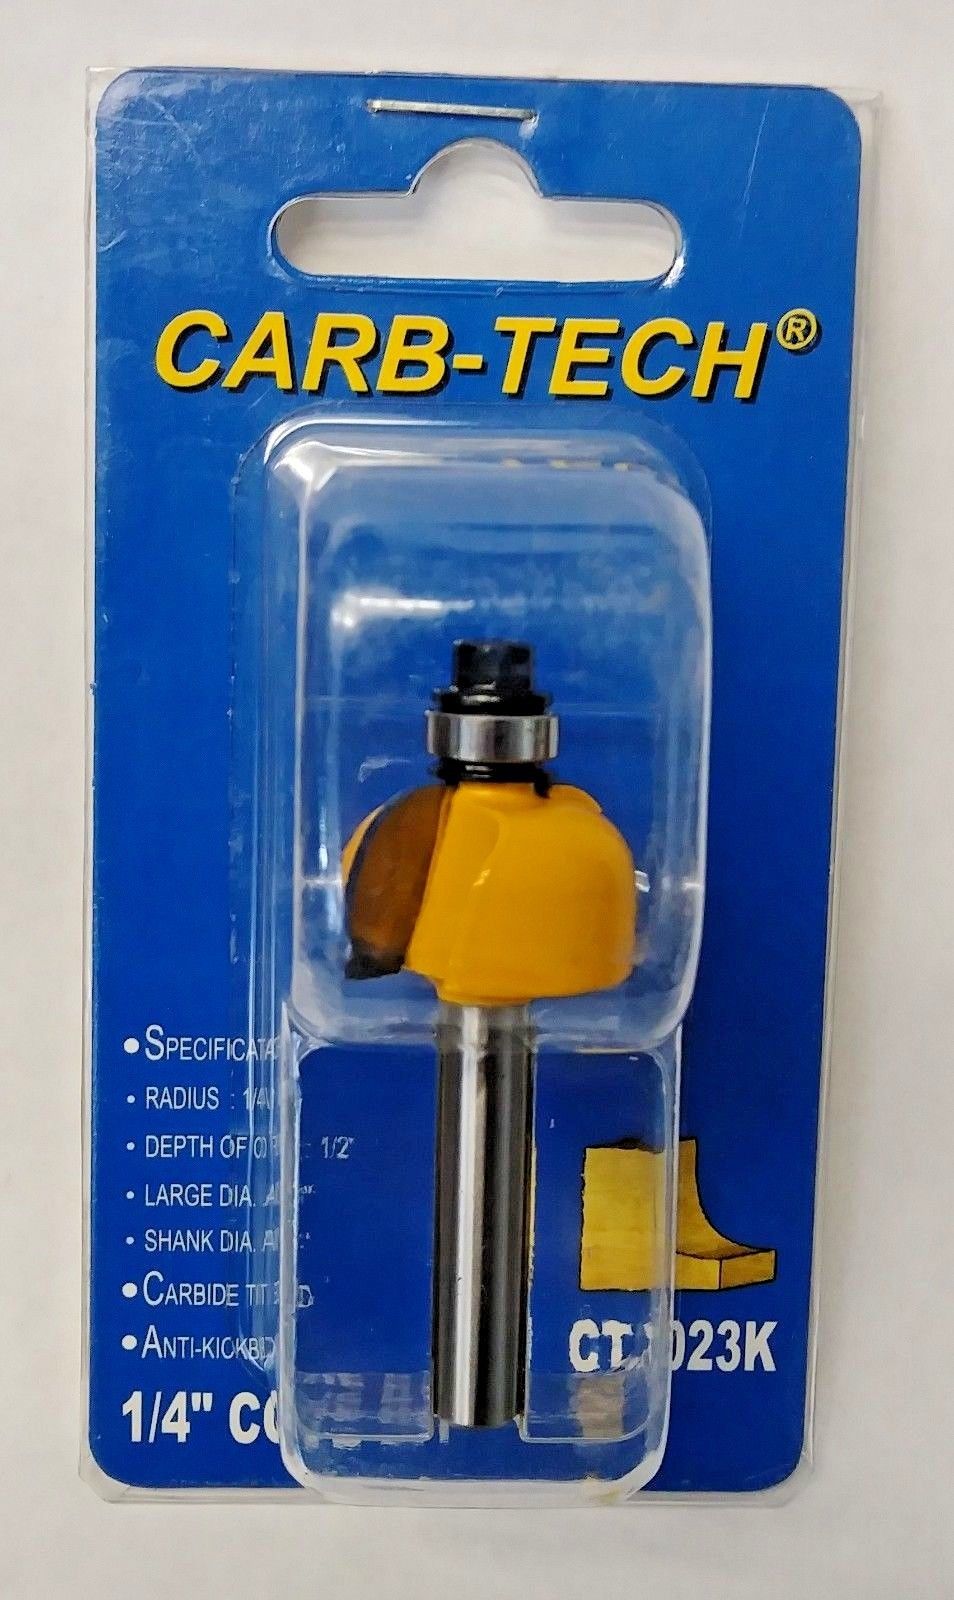 Carb-Tech CT1023K 1/4" Carbide Tipped Cove Router Bit